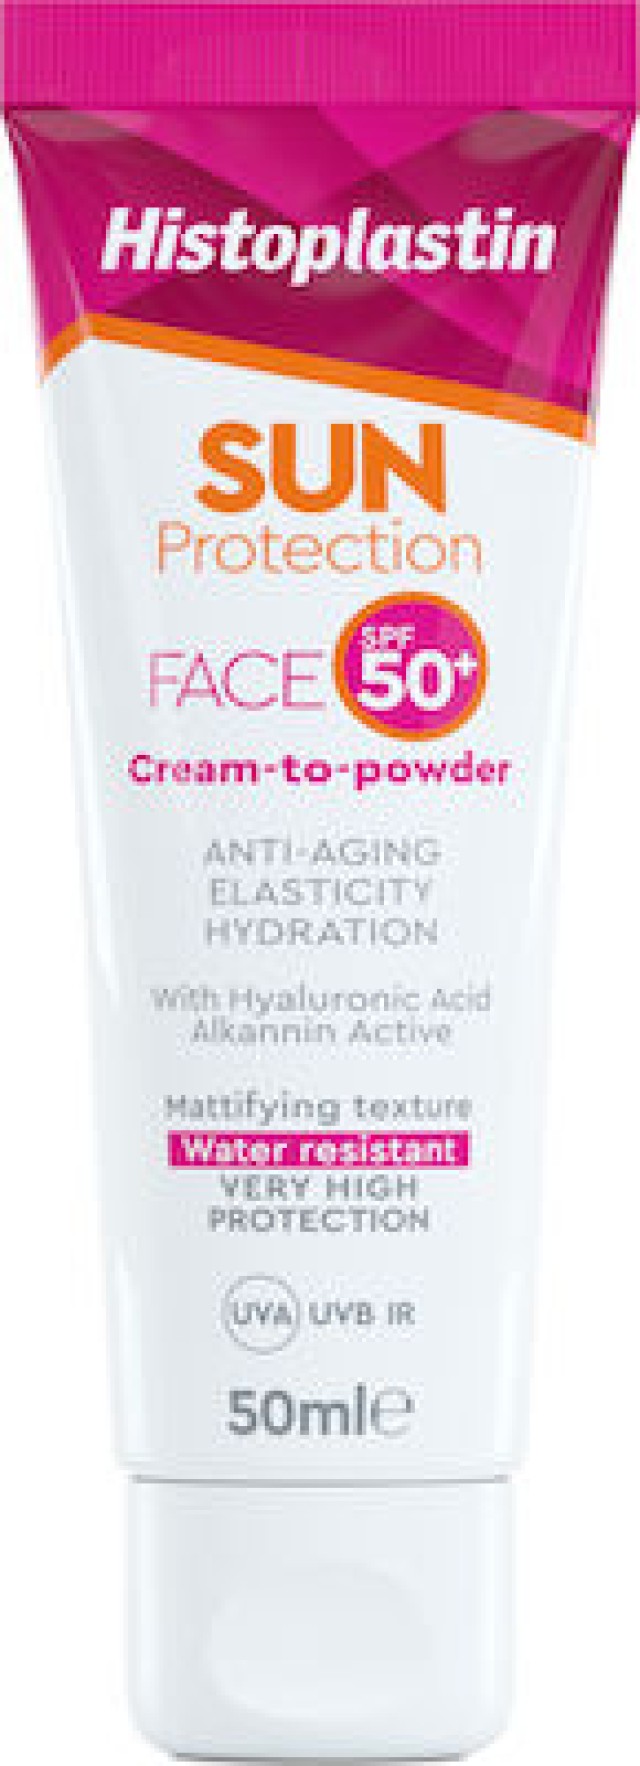 Histoplastin Sun Protection Face Cream to Powder SPF50+, 50ml